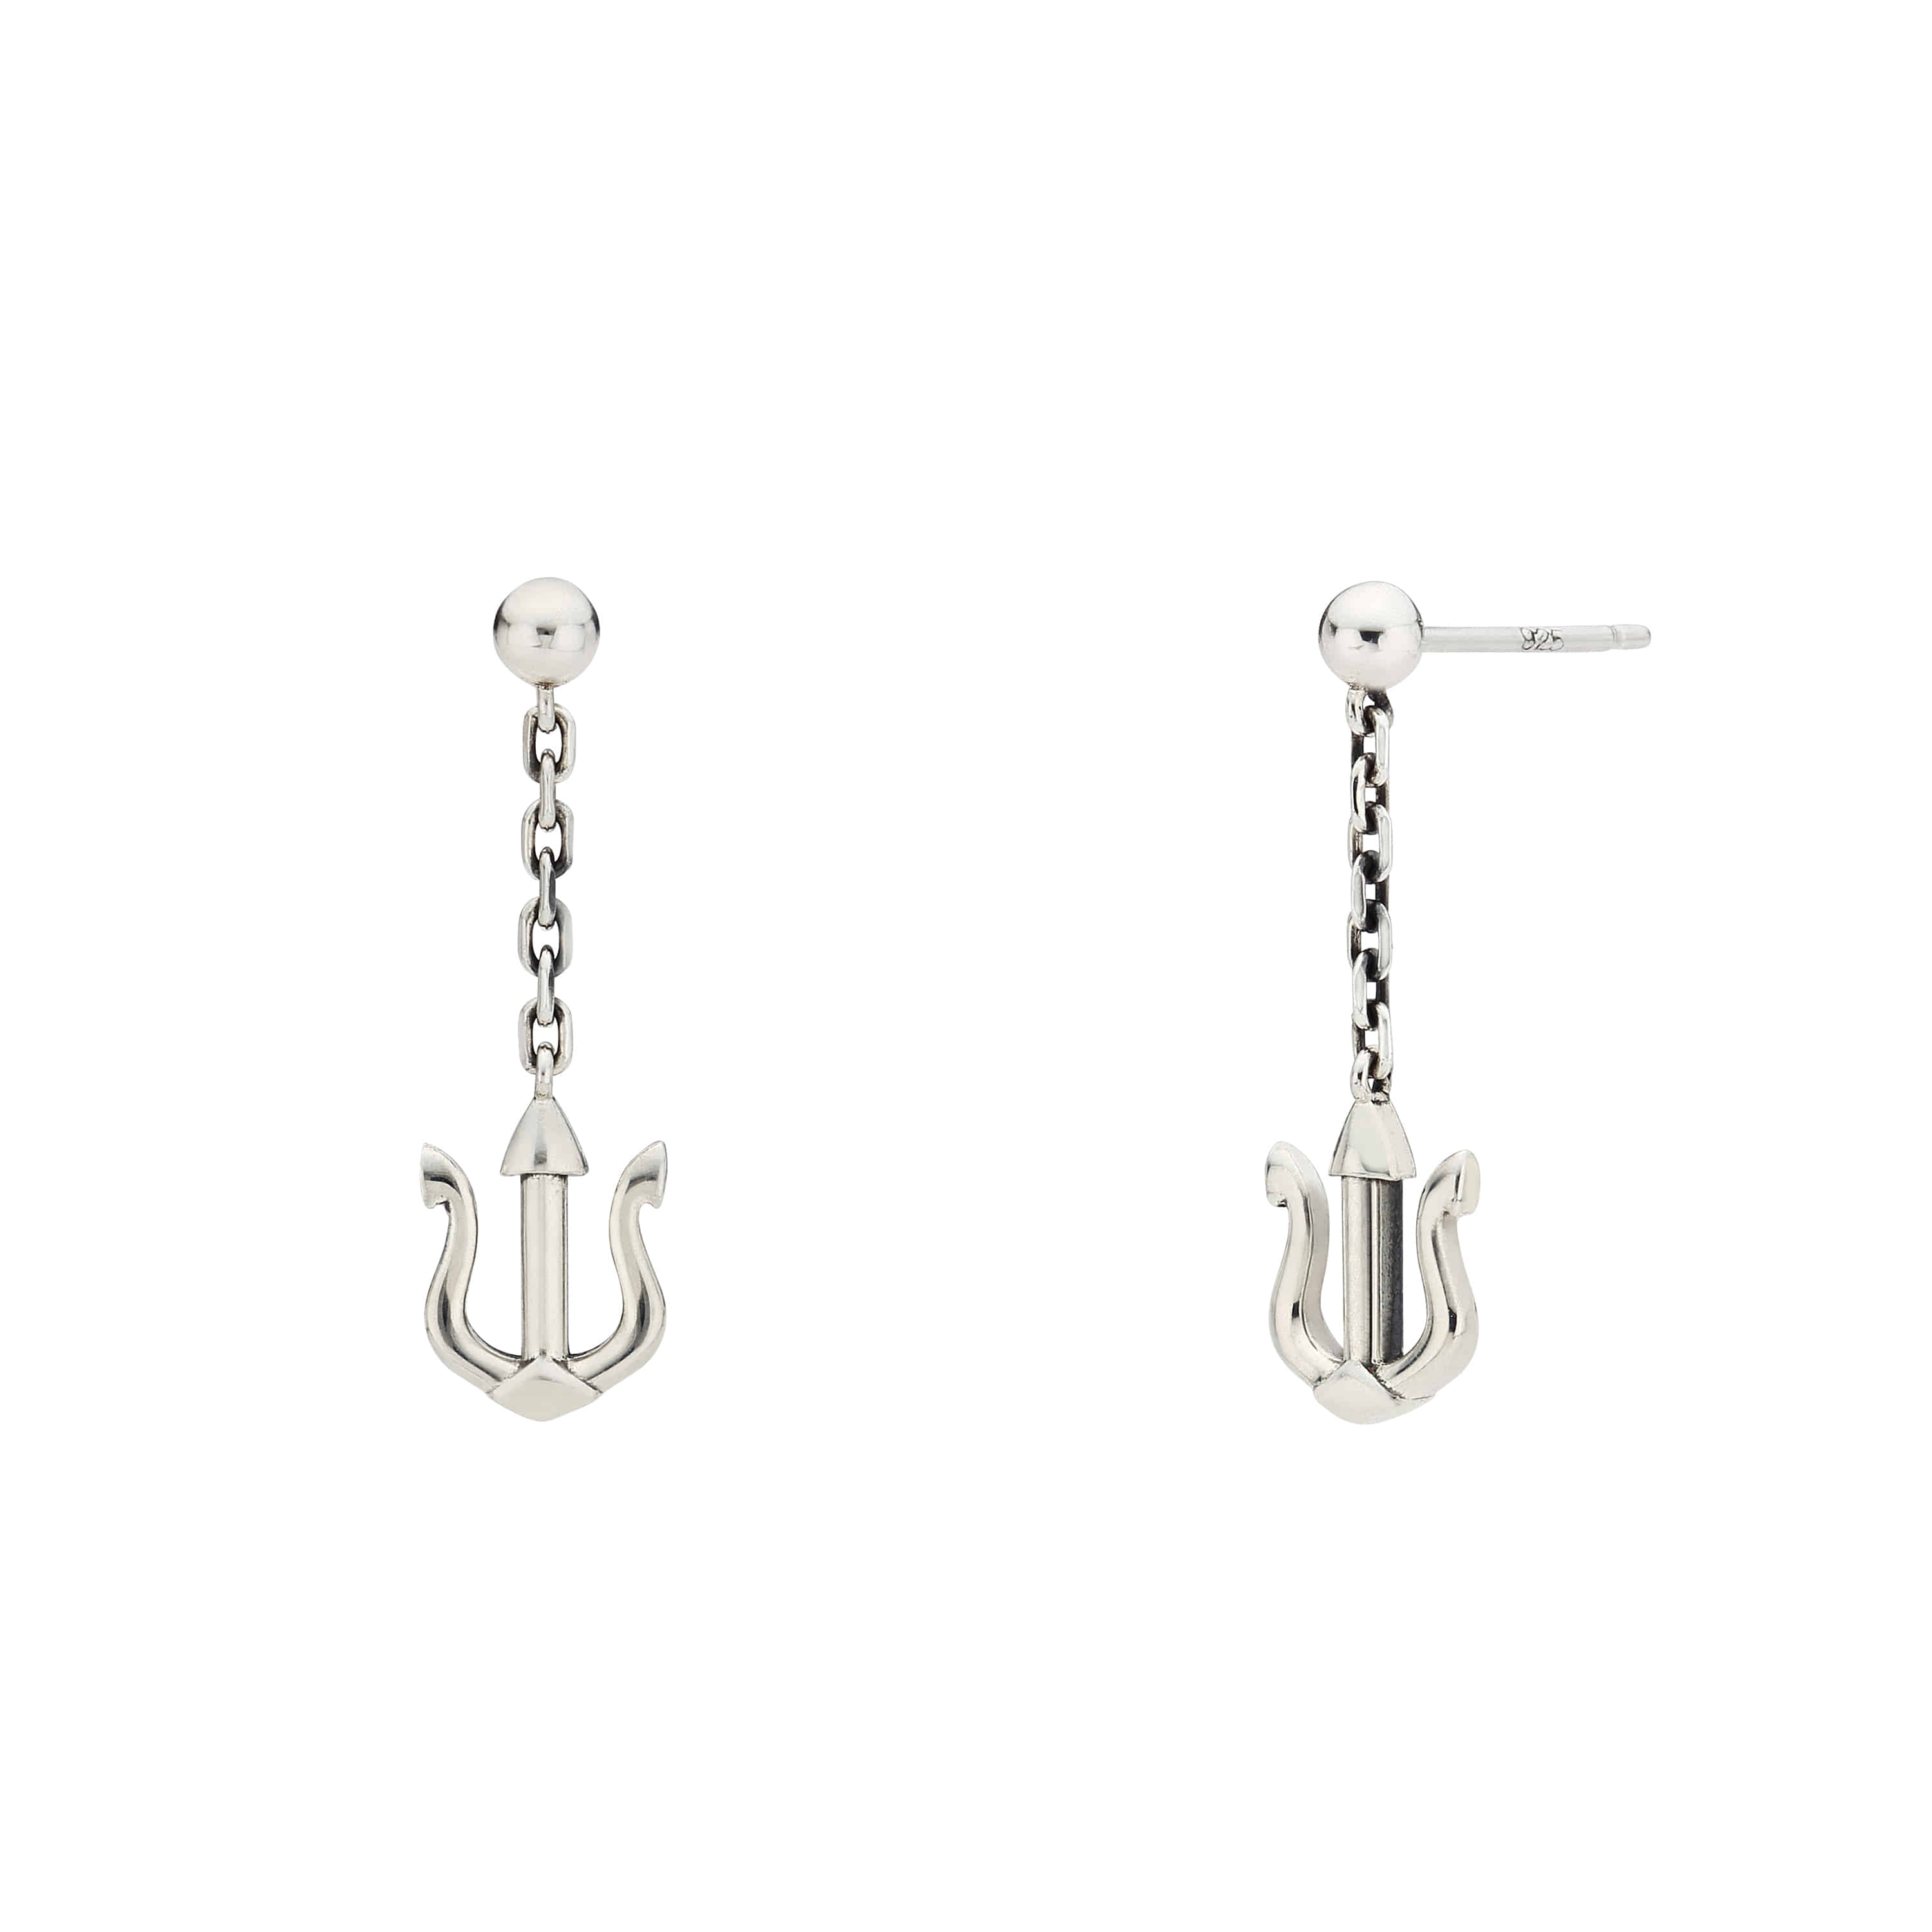 TE007 : Trident Chain Earring